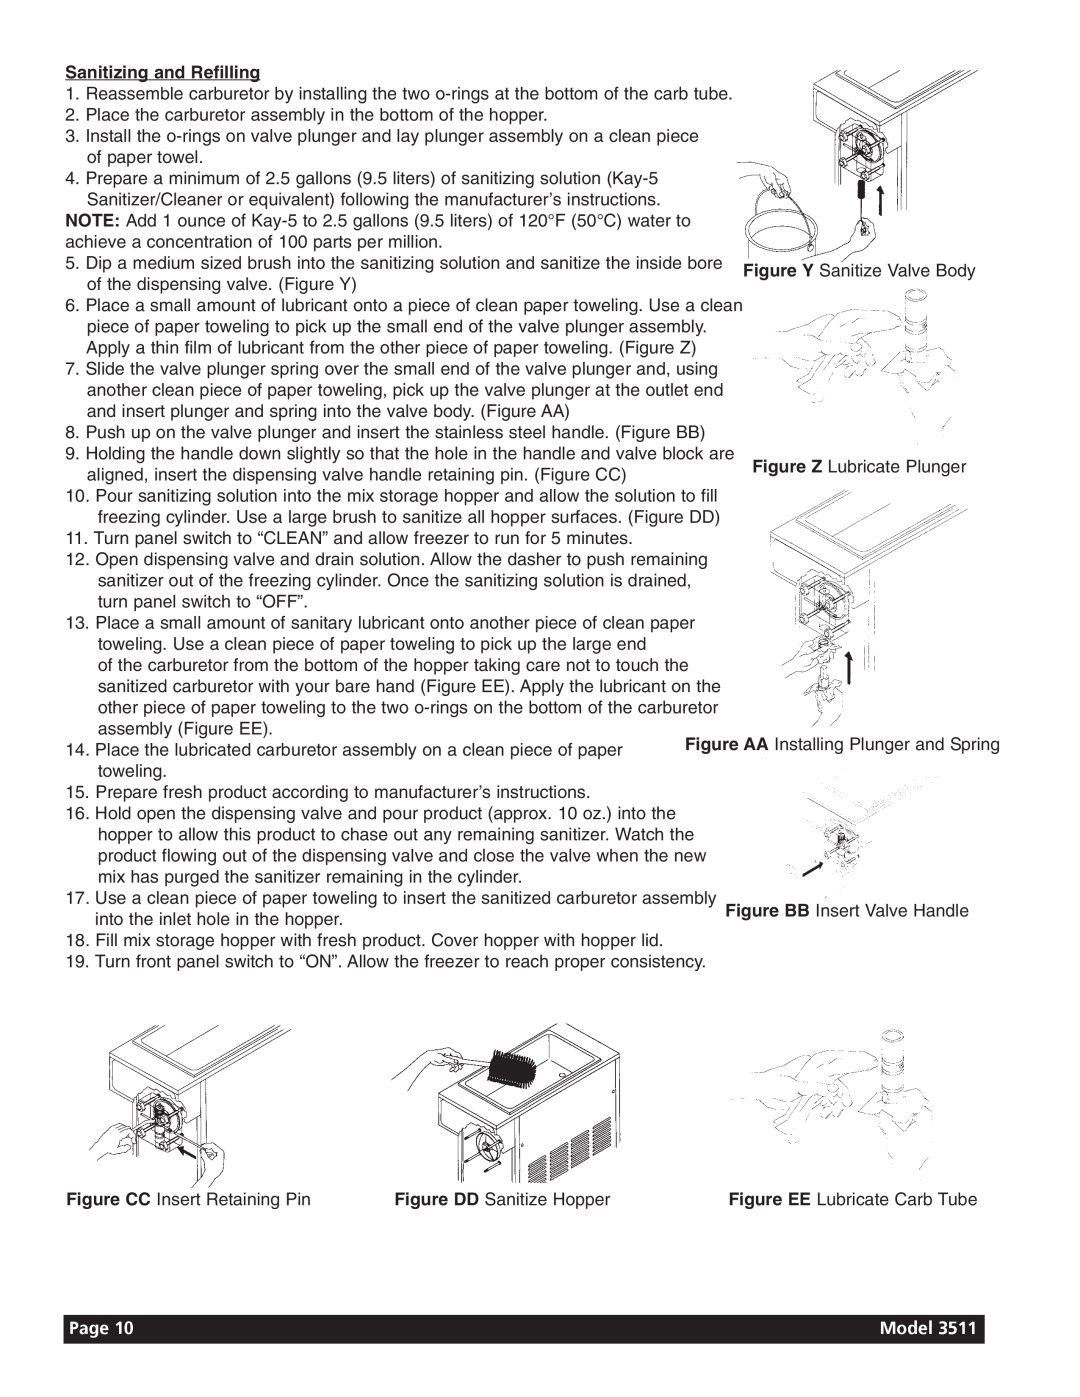 Grindmaster 3511 manual Sanitizing and Refilling, Figure CC Insert Retaining Pin, Figure DD Sanitize Hopper, Page 